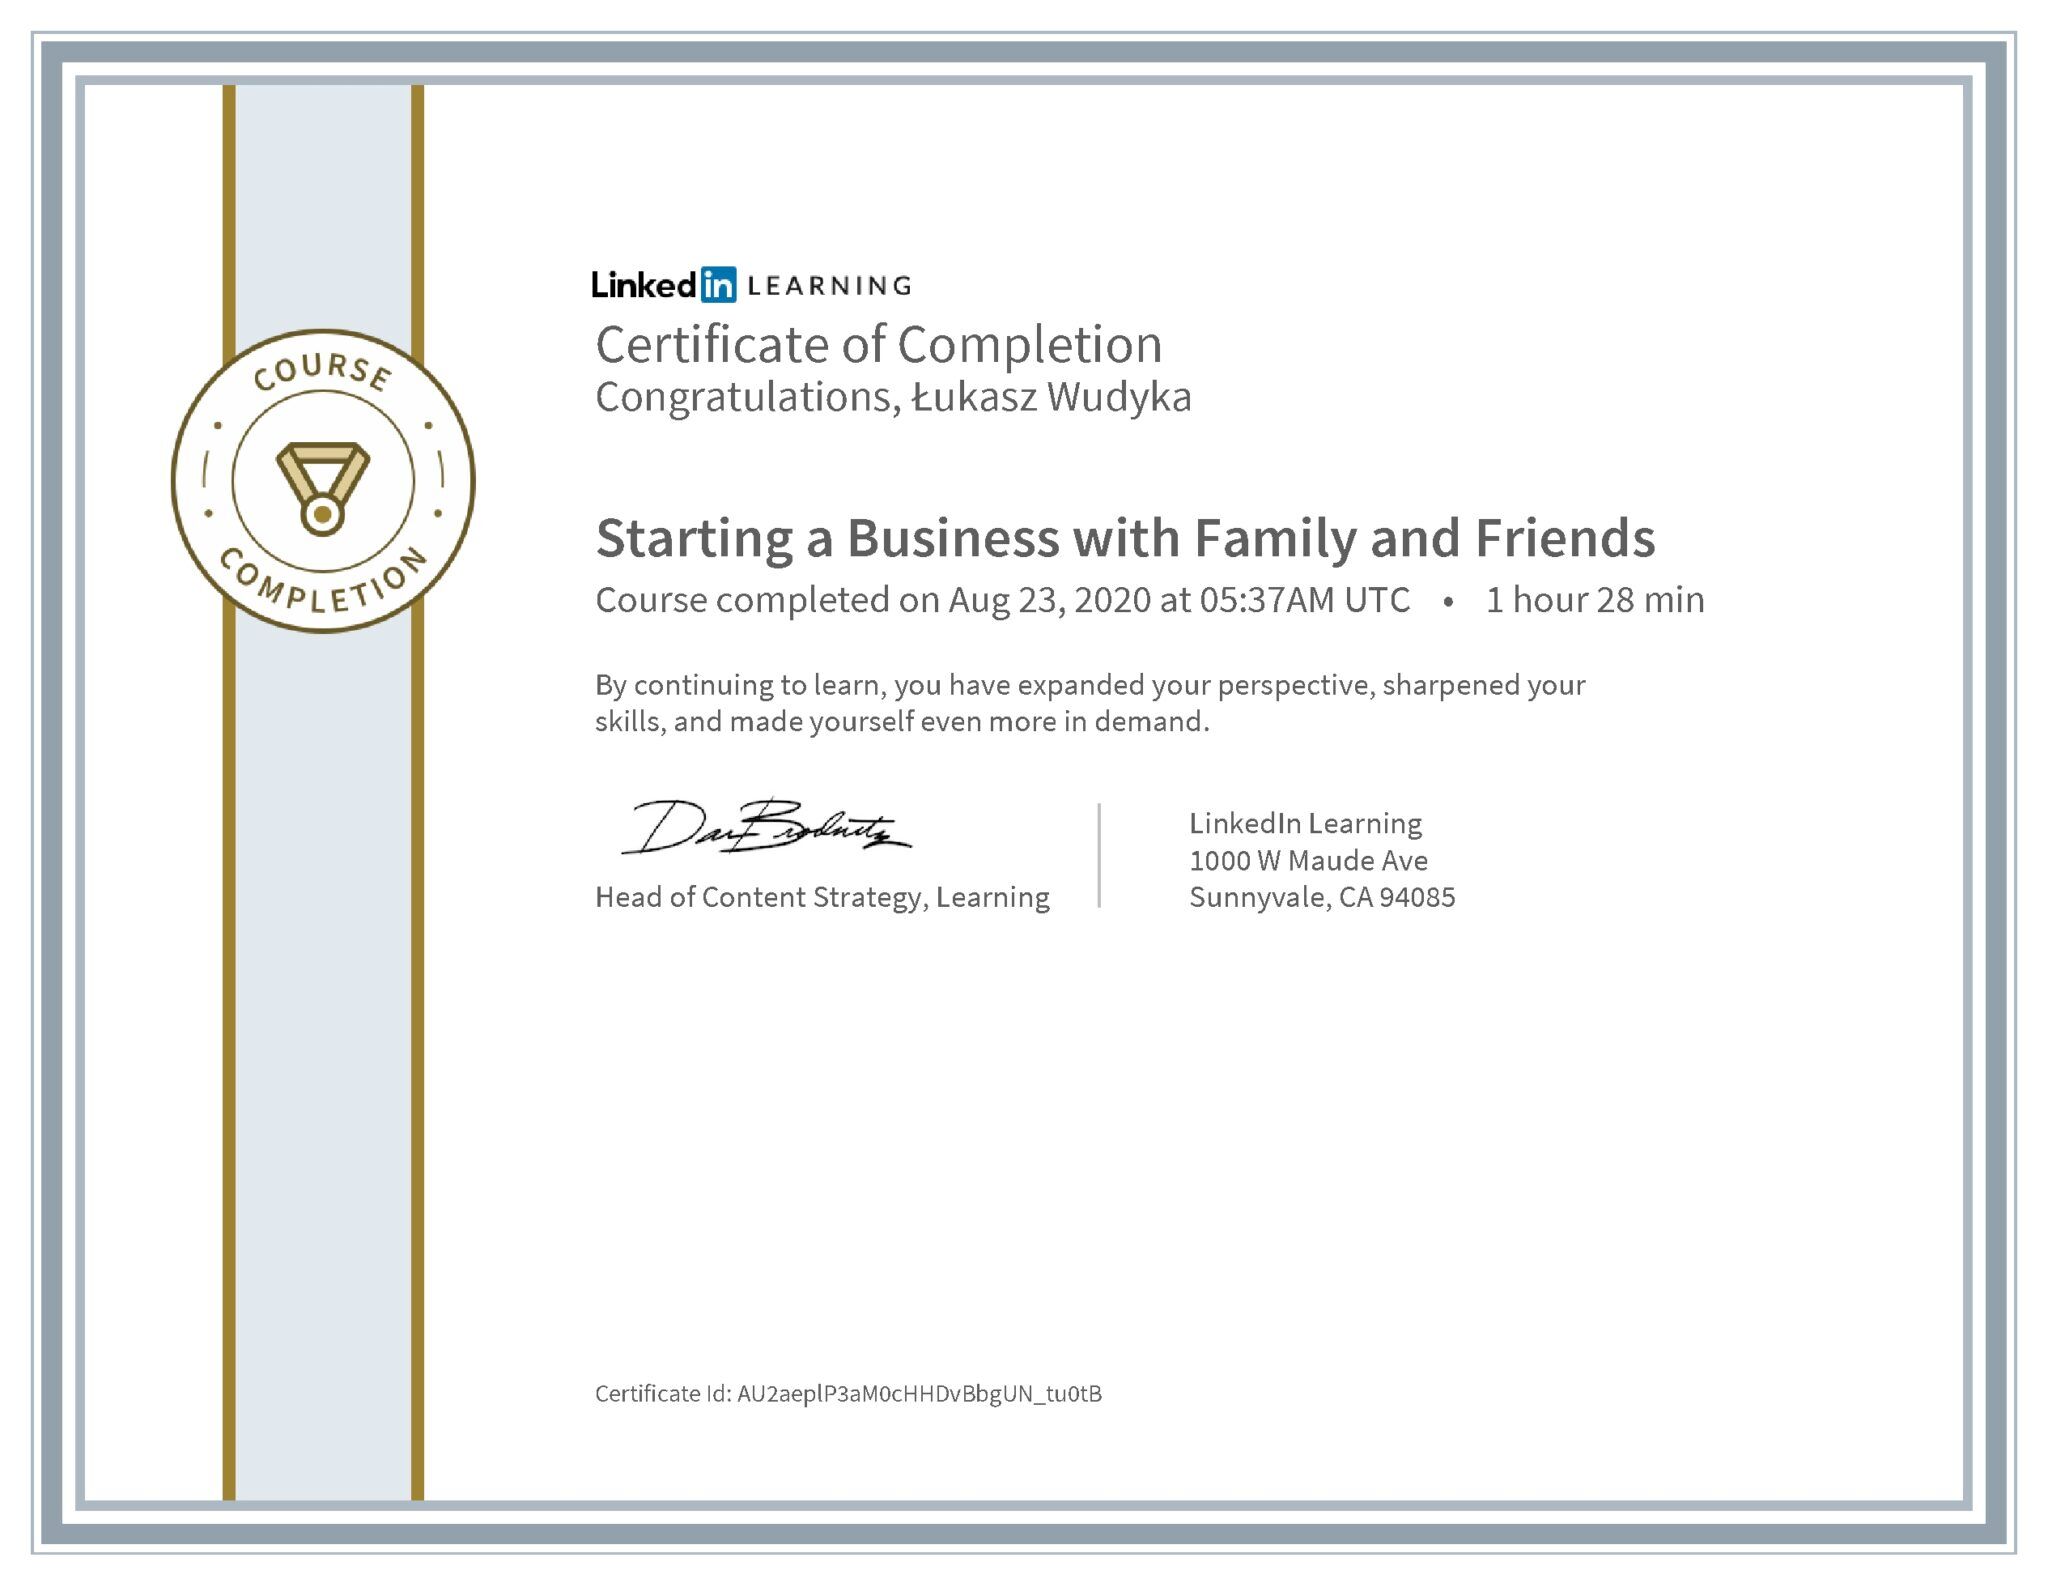 Łukasz Wudyka certyfikat LinkedIn Starting a Business with Family and Friends